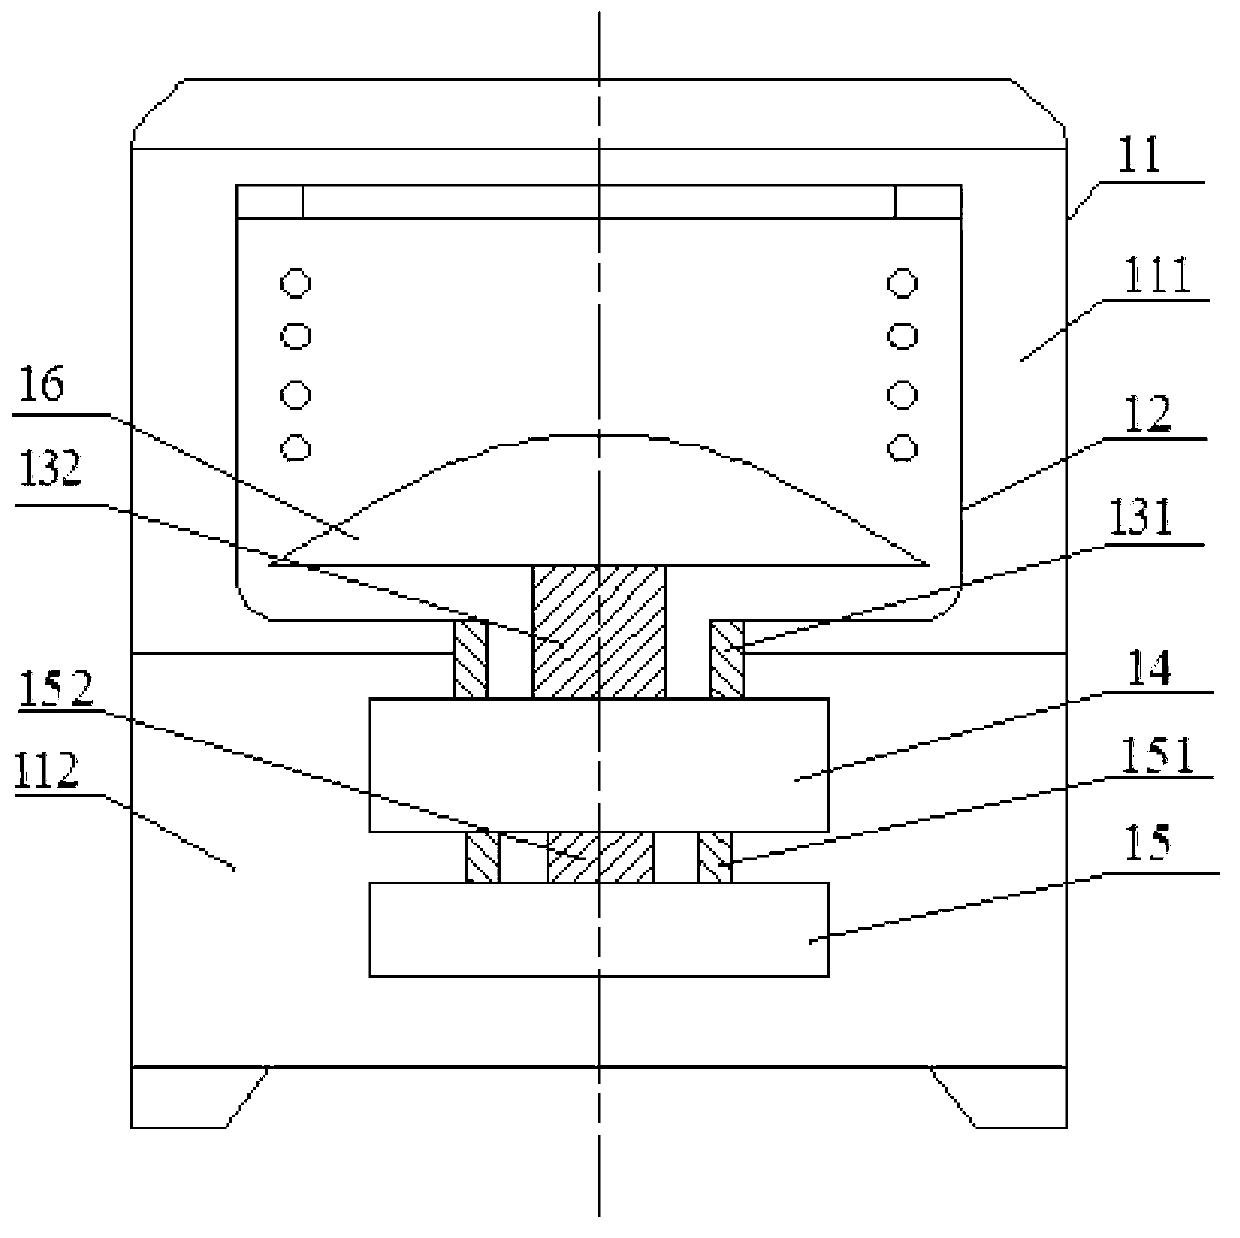 Birotor permanent magnet motor and washing machine